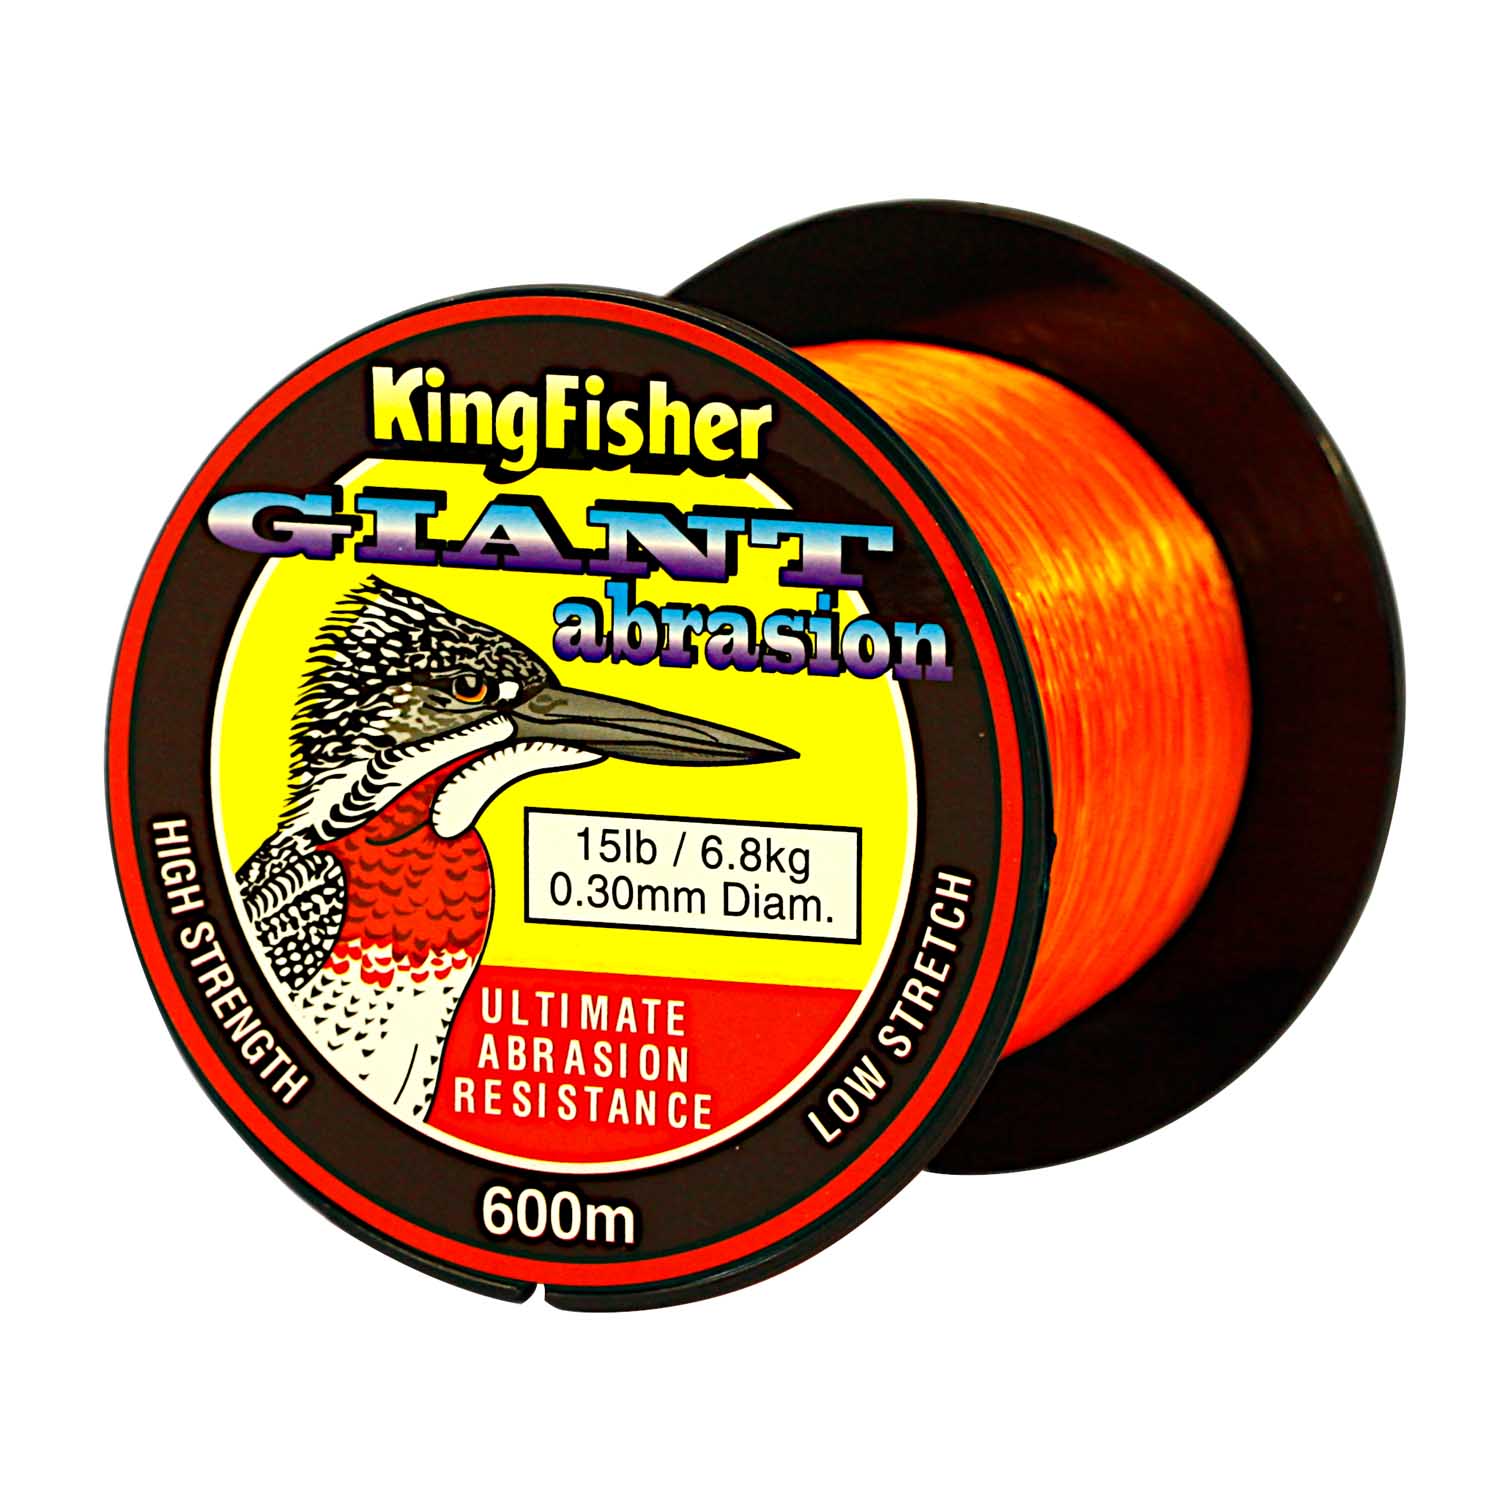 Kingfisher Giant Abrasion Nylon Fishing Line .30MM, 6.8KG/15LB Colour  Orange, 600M Spool - Showspace